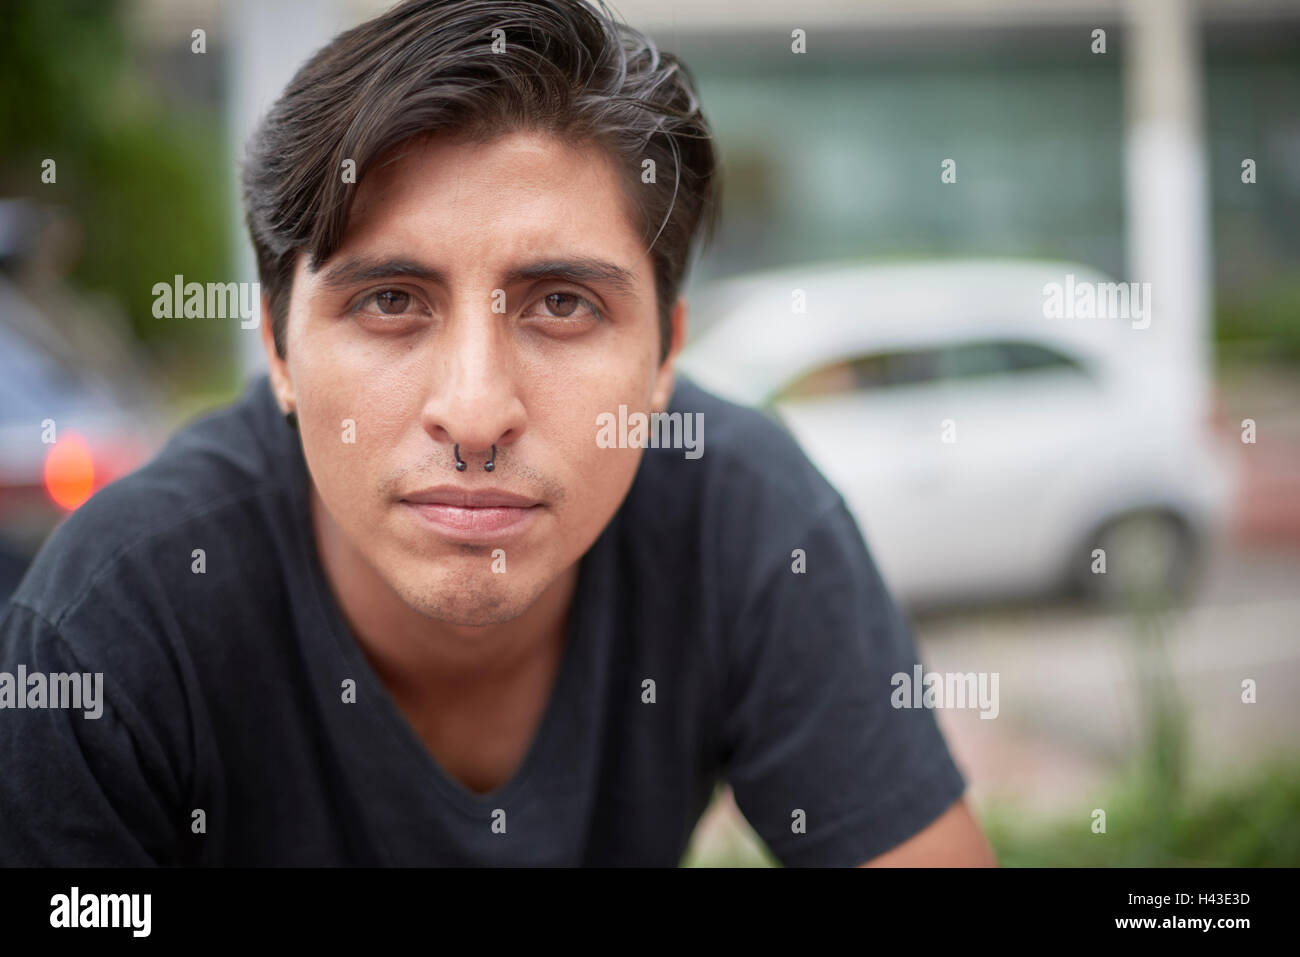 Serious Hispanic man with pierced nose Stock Photo